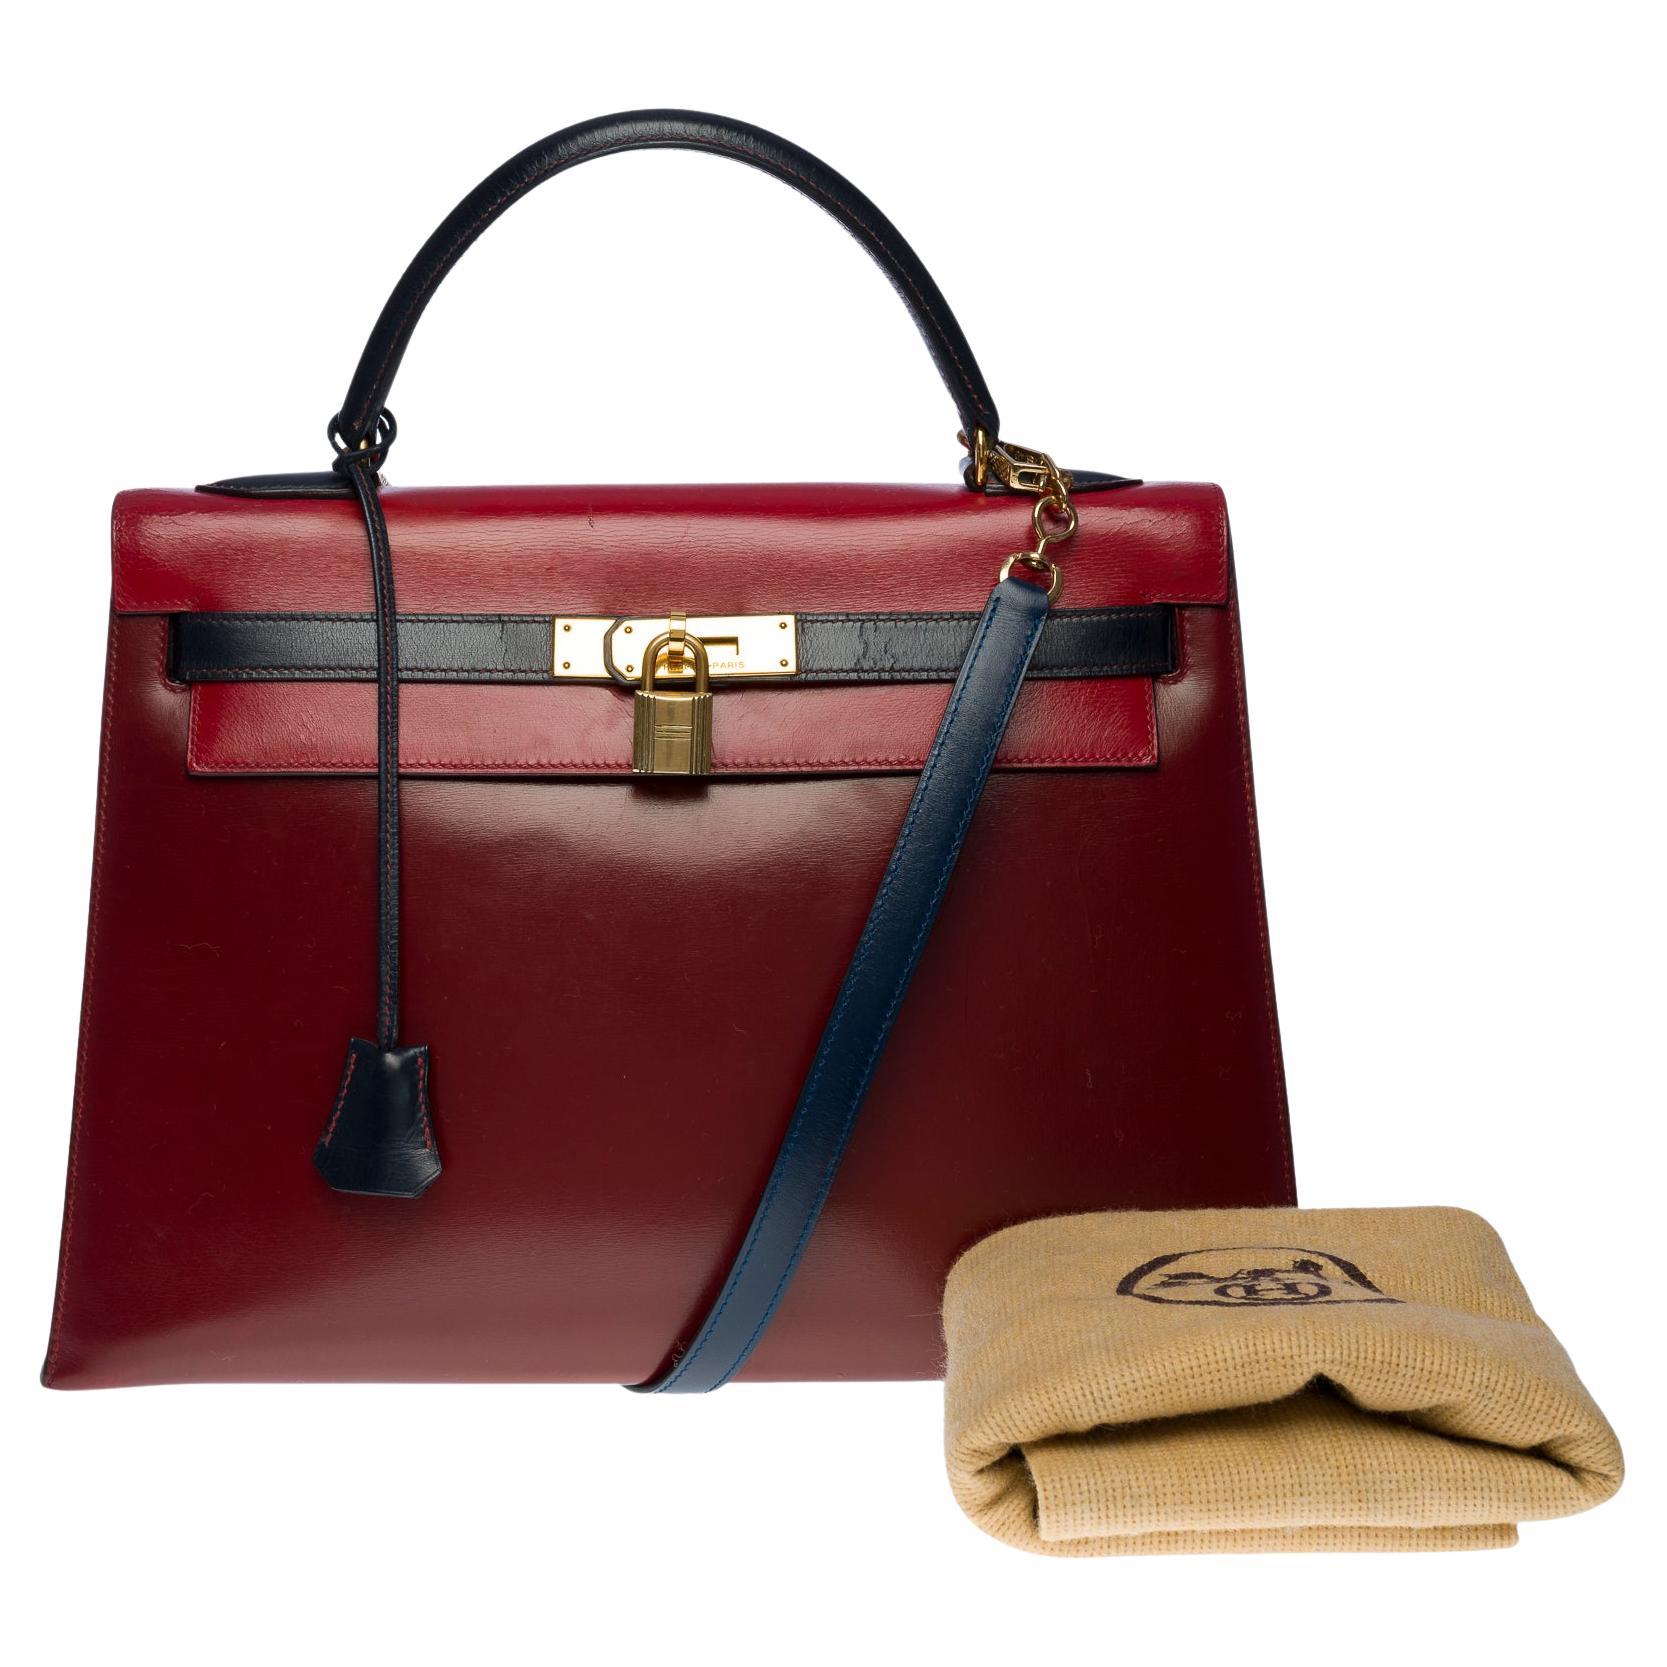 Rare "Arlequin" Hermes Kelly 32 sellier handbag strap Tricolor in box calf, GHW